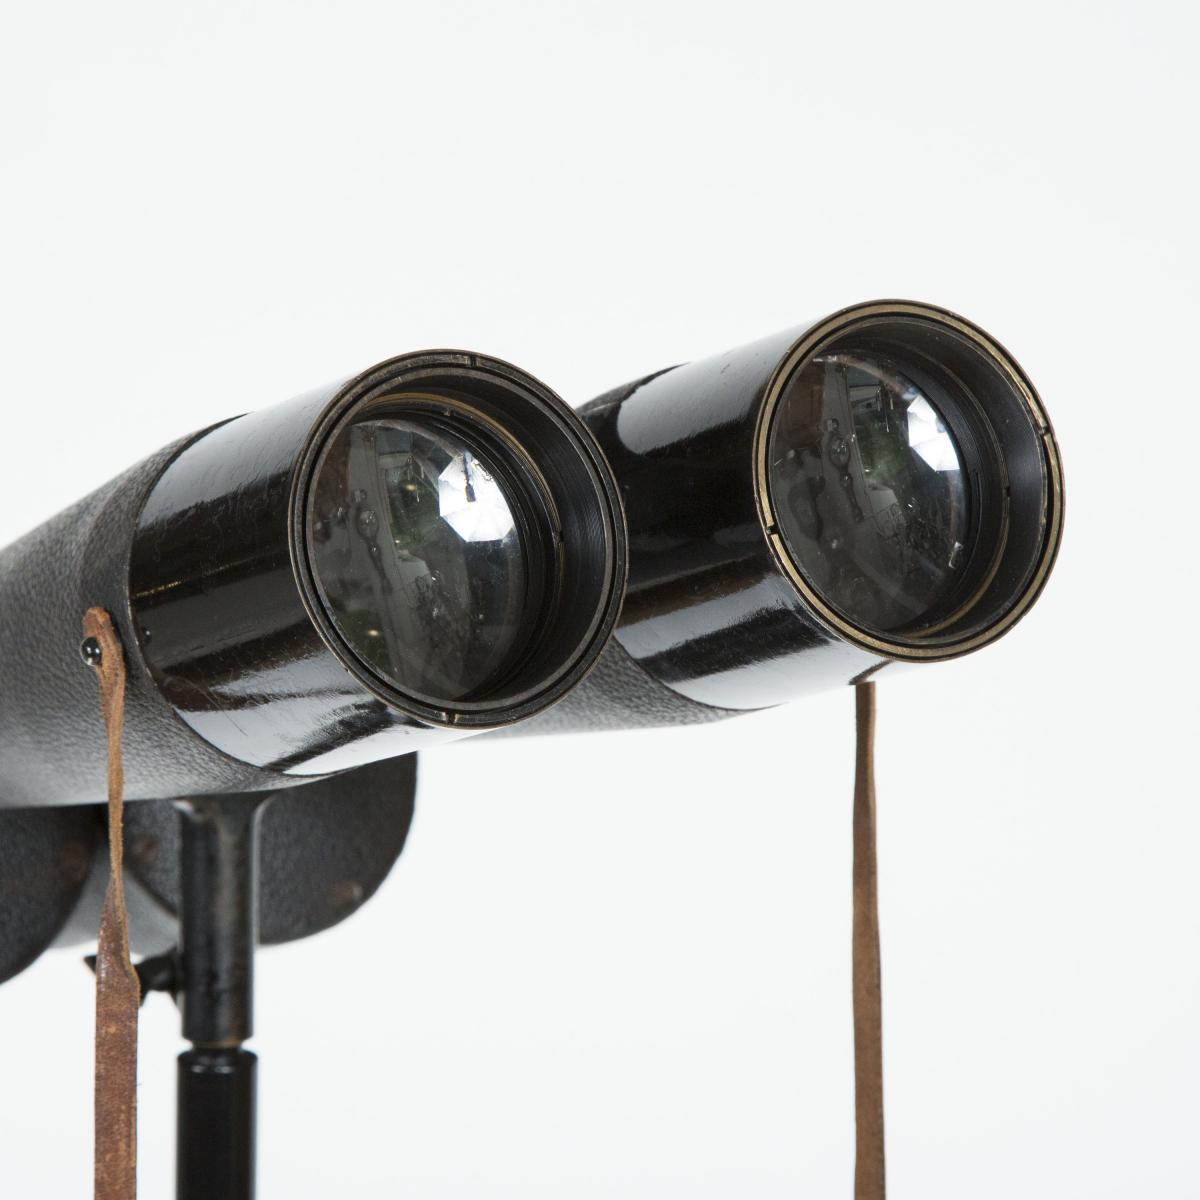 Carl Zeiss Jena Starmorbi Binoculars